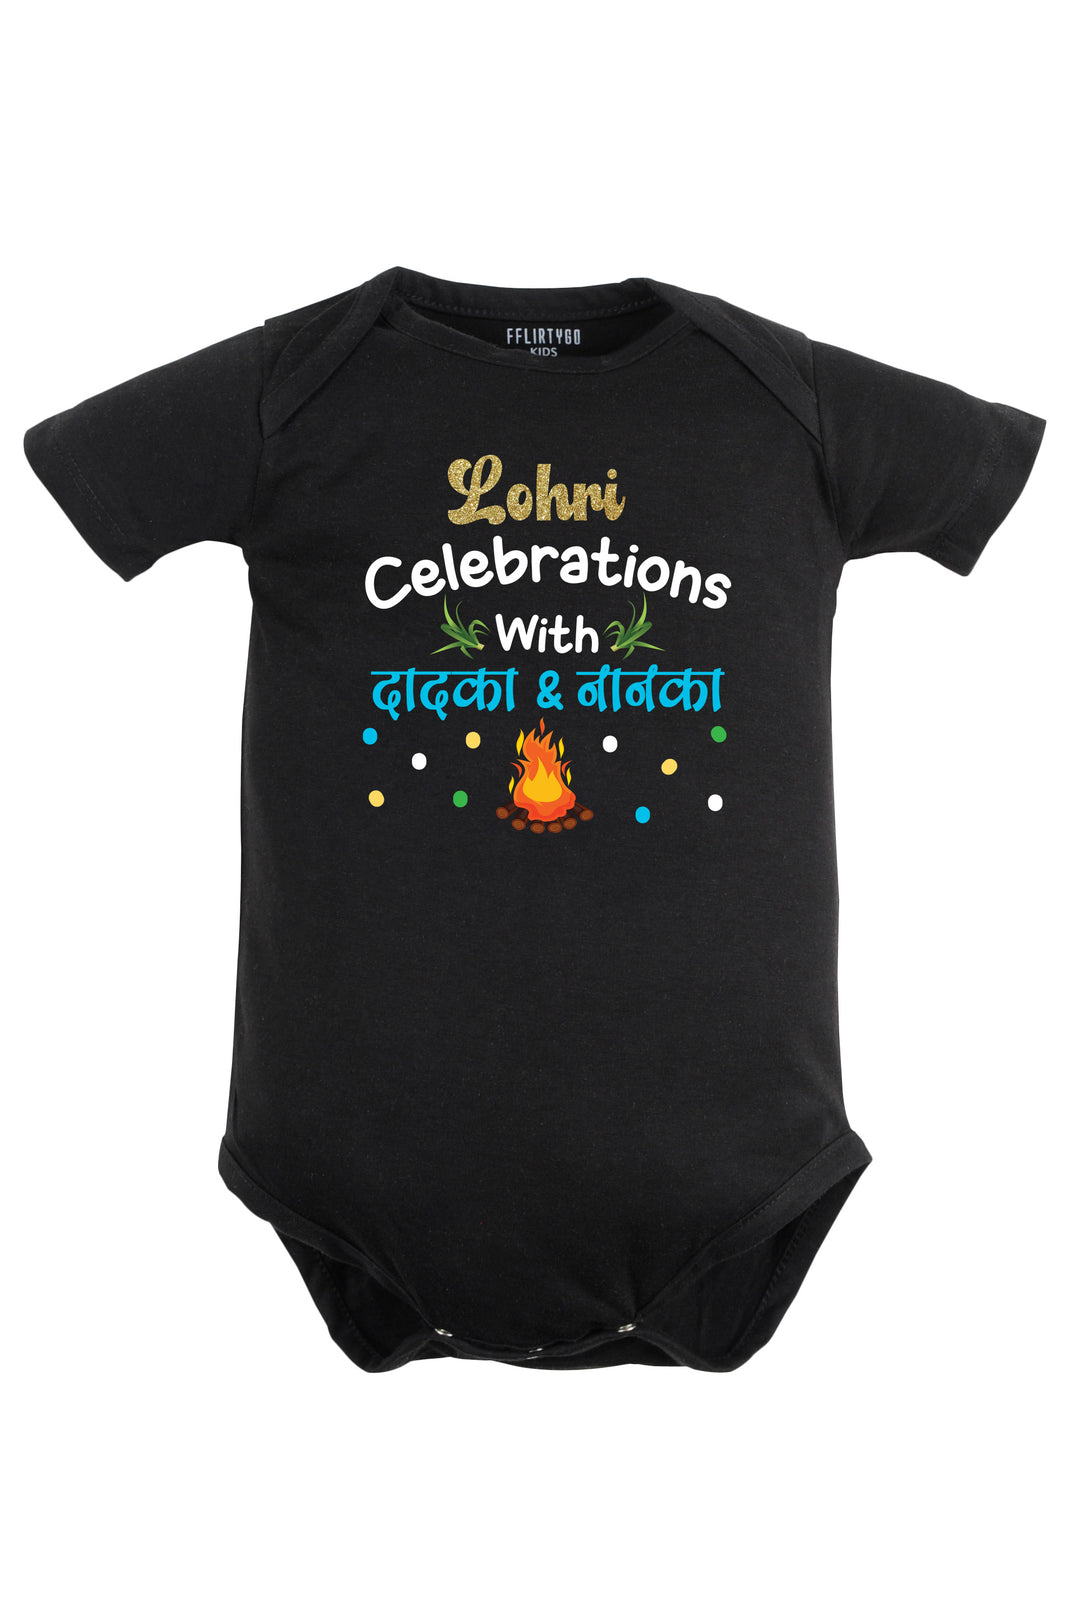 Lohri Celebrations With Dadka & Nanka (Hindi) Baby Romper | Onesies